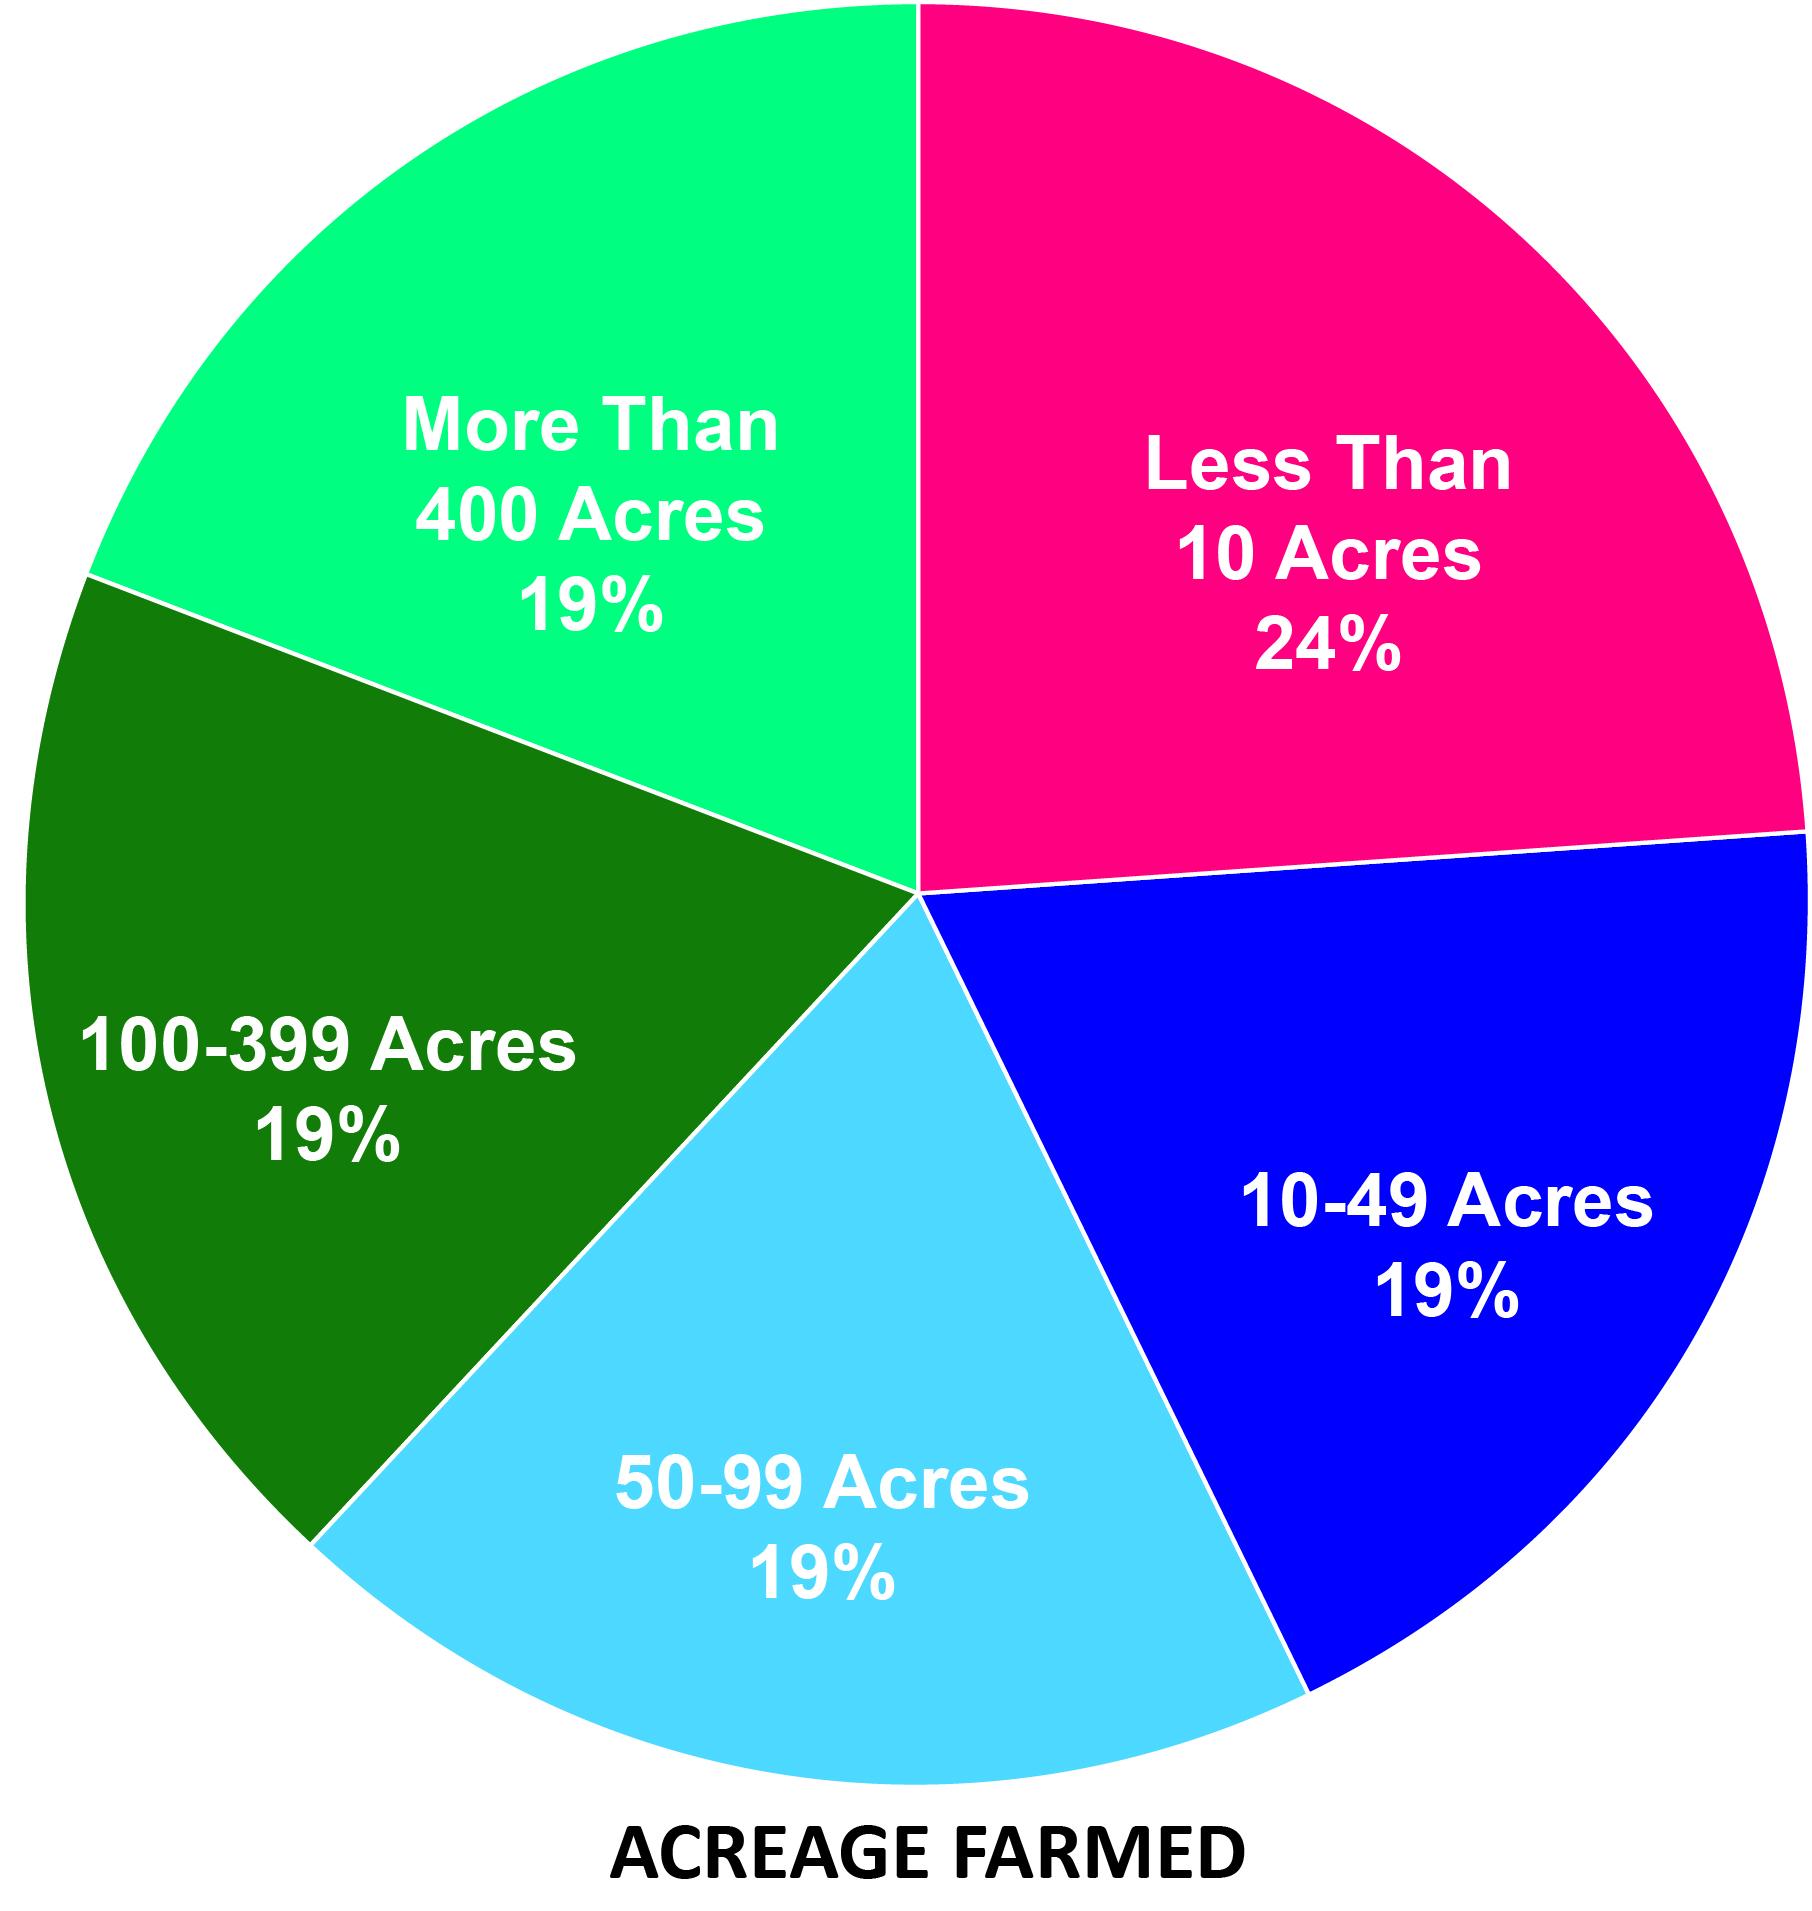 COVID-19 Impact Survey results on acreage farmed. Less than ten acres- 24%, 10-49 acres-19%, 50-99 acres-19%, 100-399 acres-19%, and more than 400 acres-19.